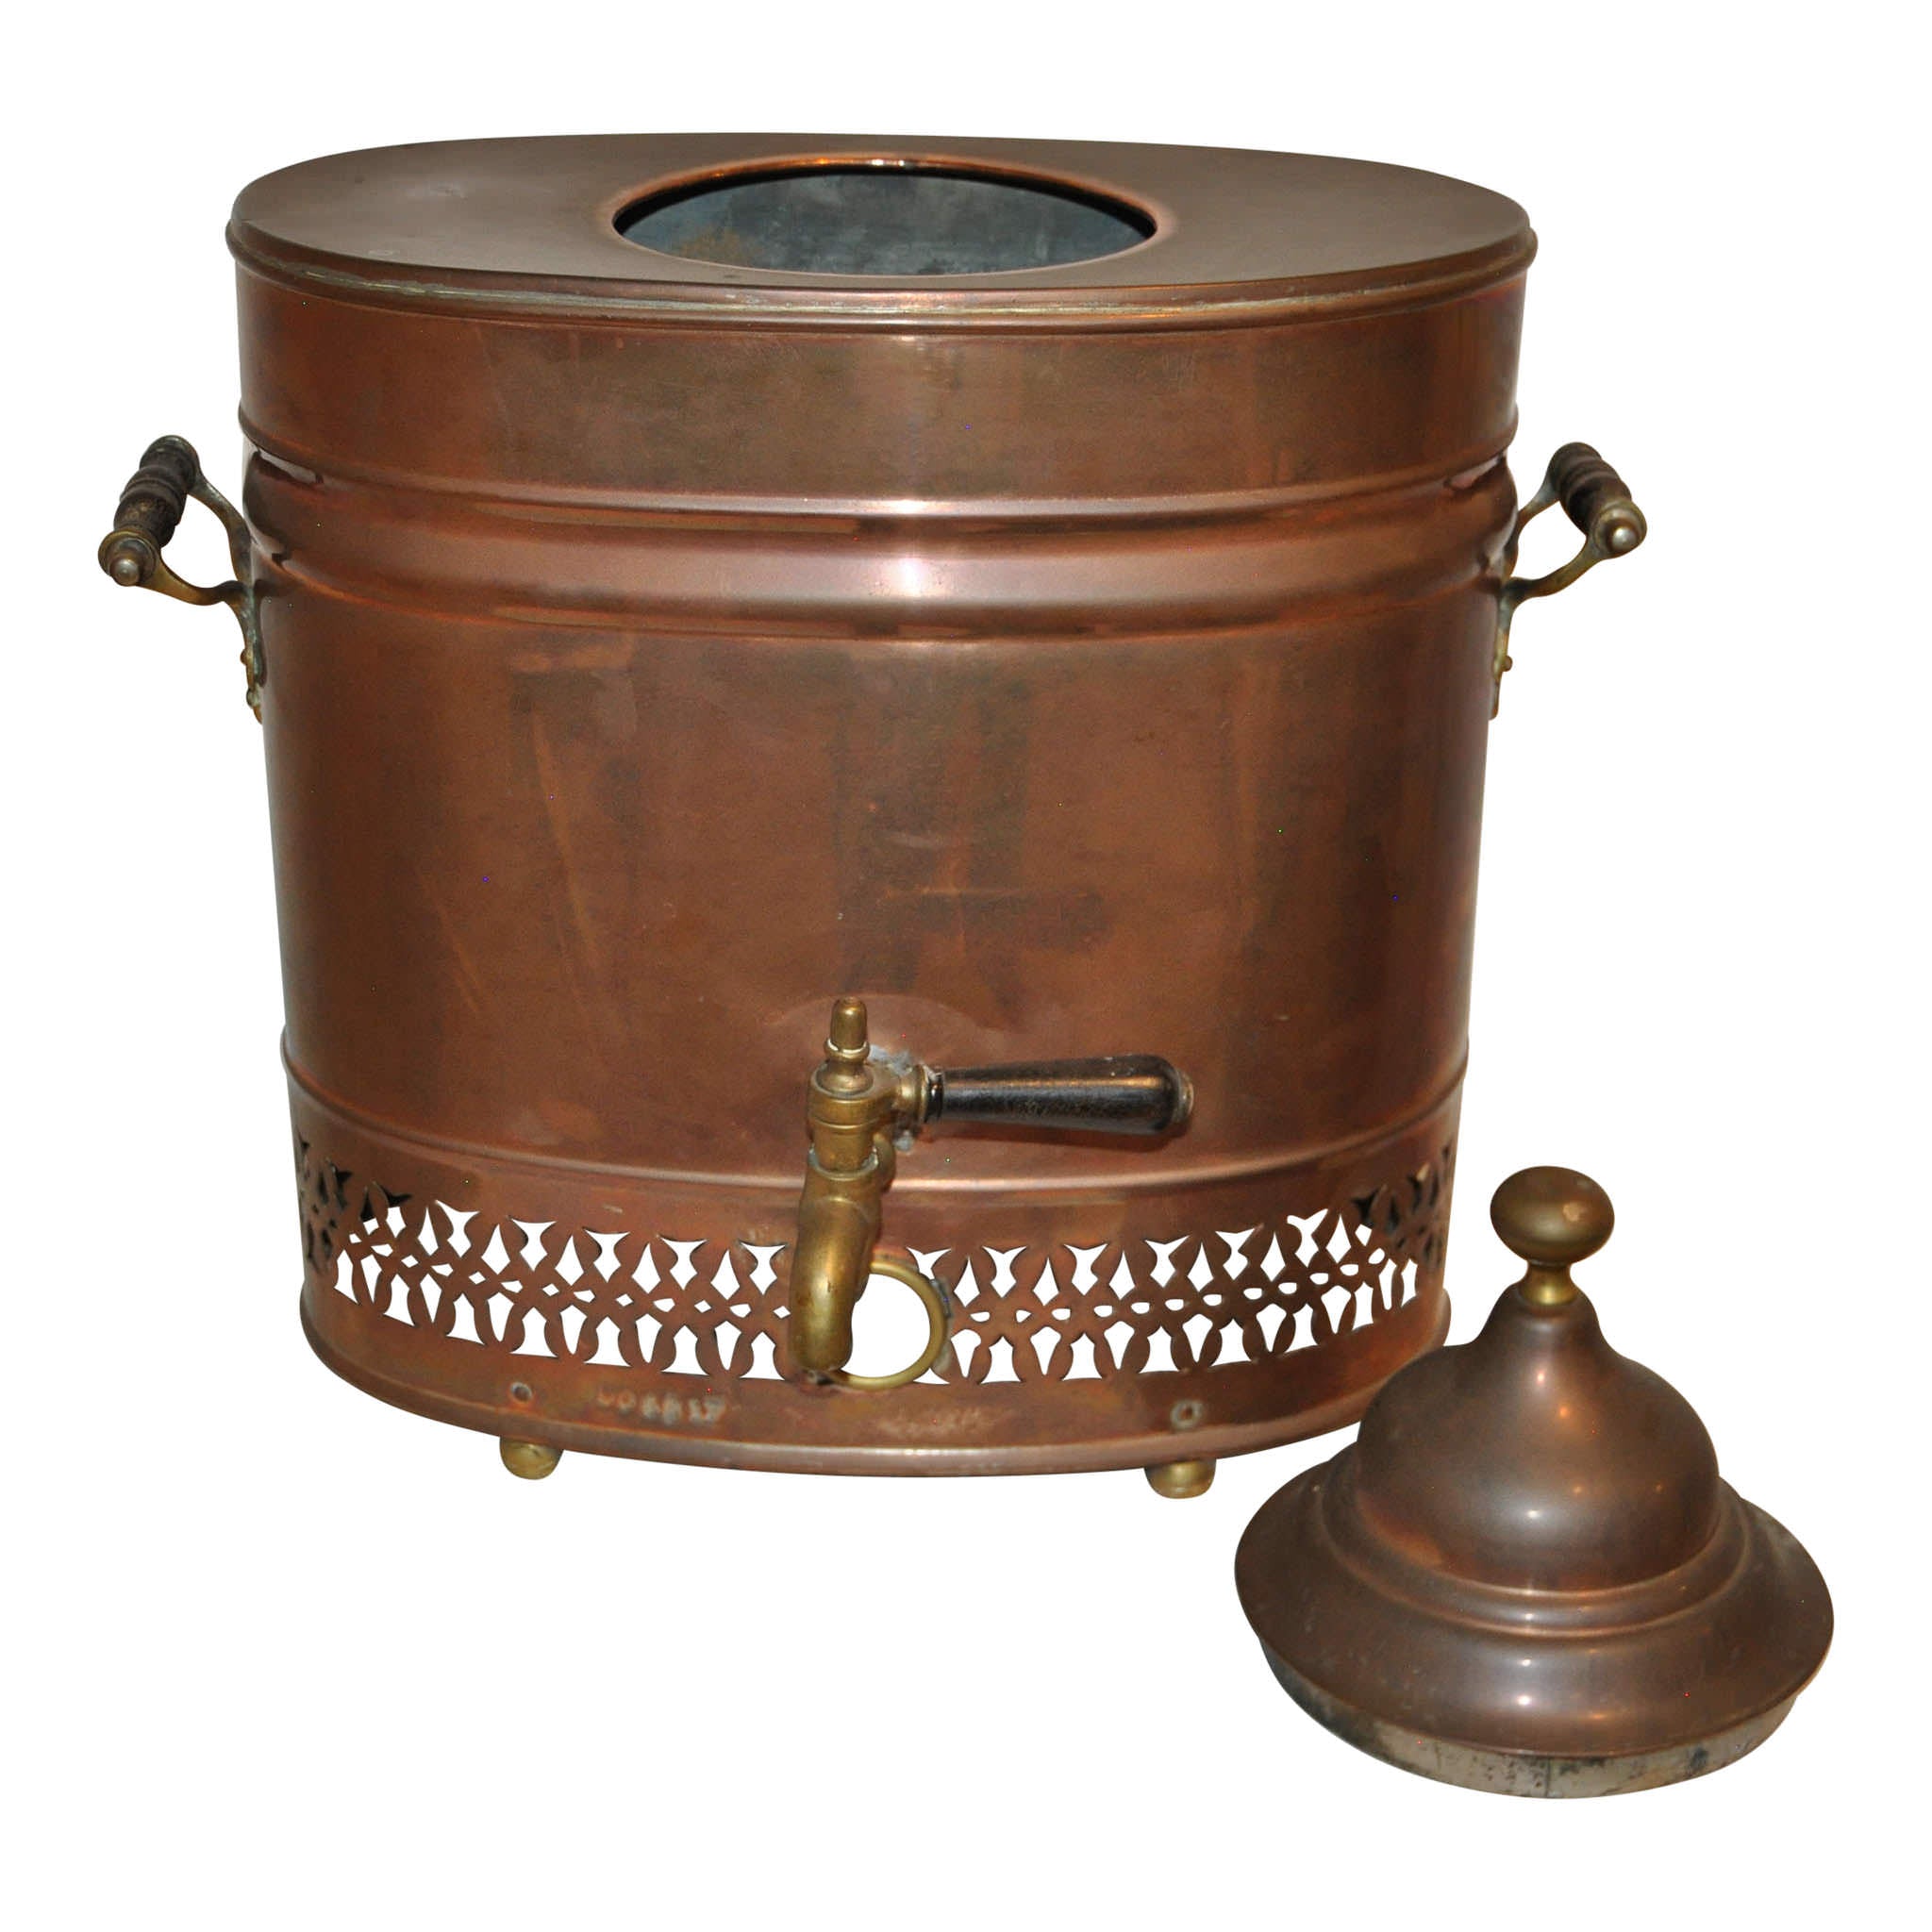 OXO Copper Hot Water Tank Dispenser